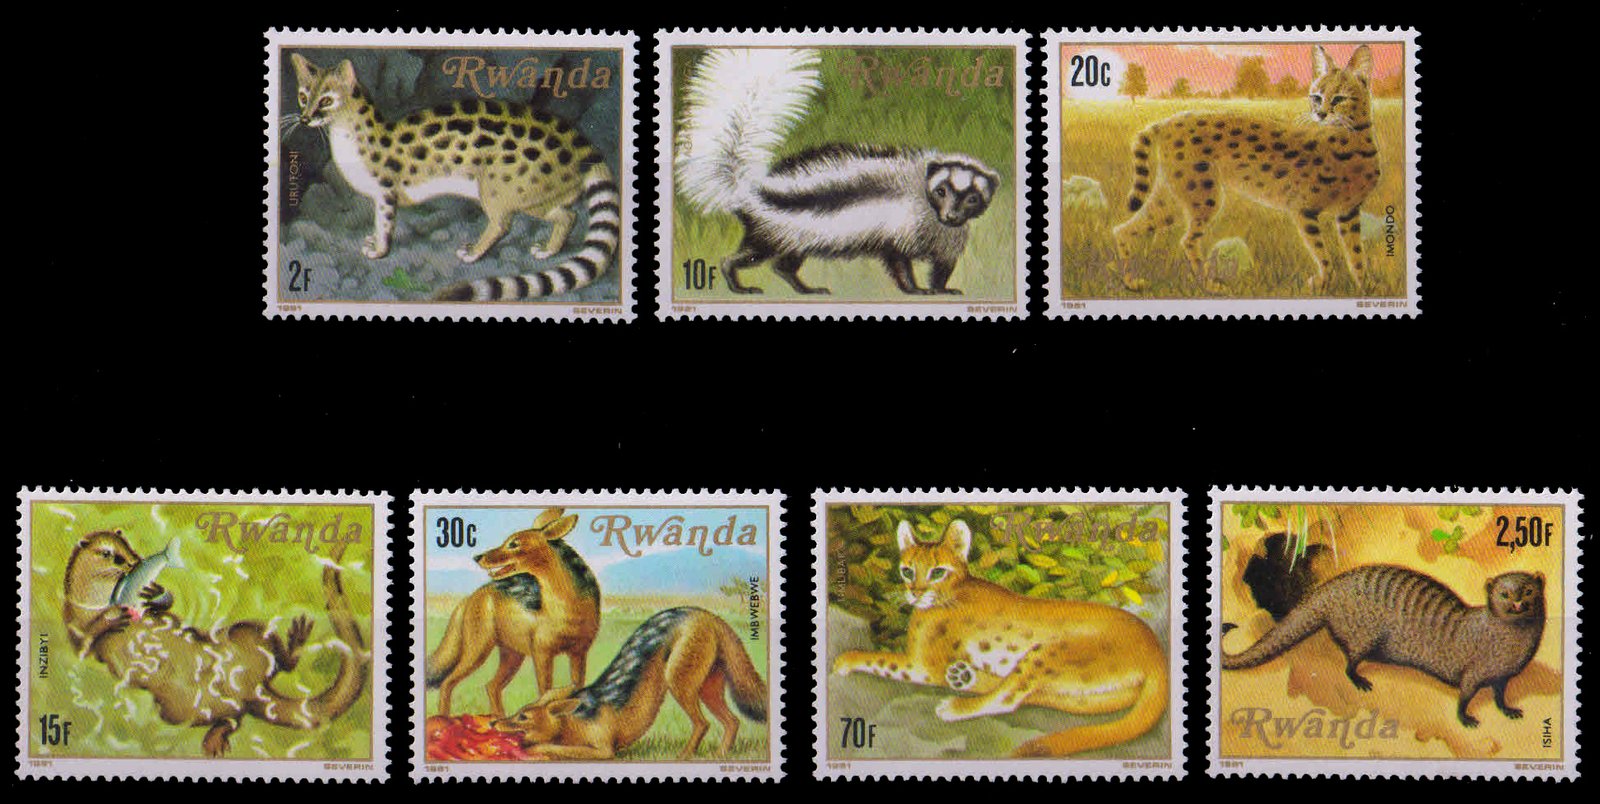 RWANDA 1981-Carnivorous Animals, Cat, Jackal, Serval Genet, Mongoose, Zorille, Set of 7 Stamps, MNH, S.G. 1049-1055-Cat � 9-